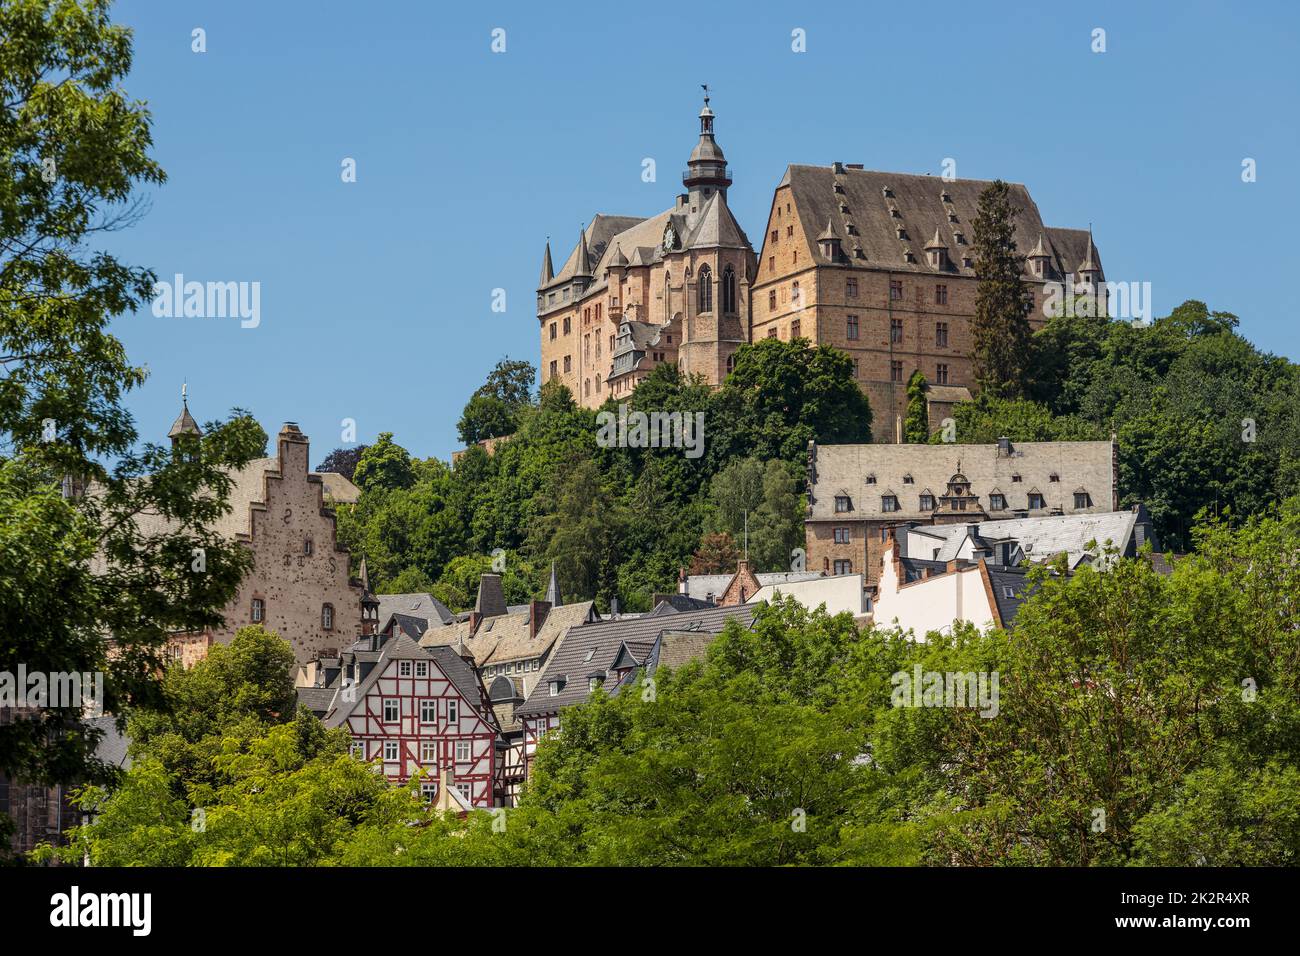 Marburg castle, also called Landgrave castle or Landgrafenschloss, in Marburg, Hesse, Germany Stock Photo